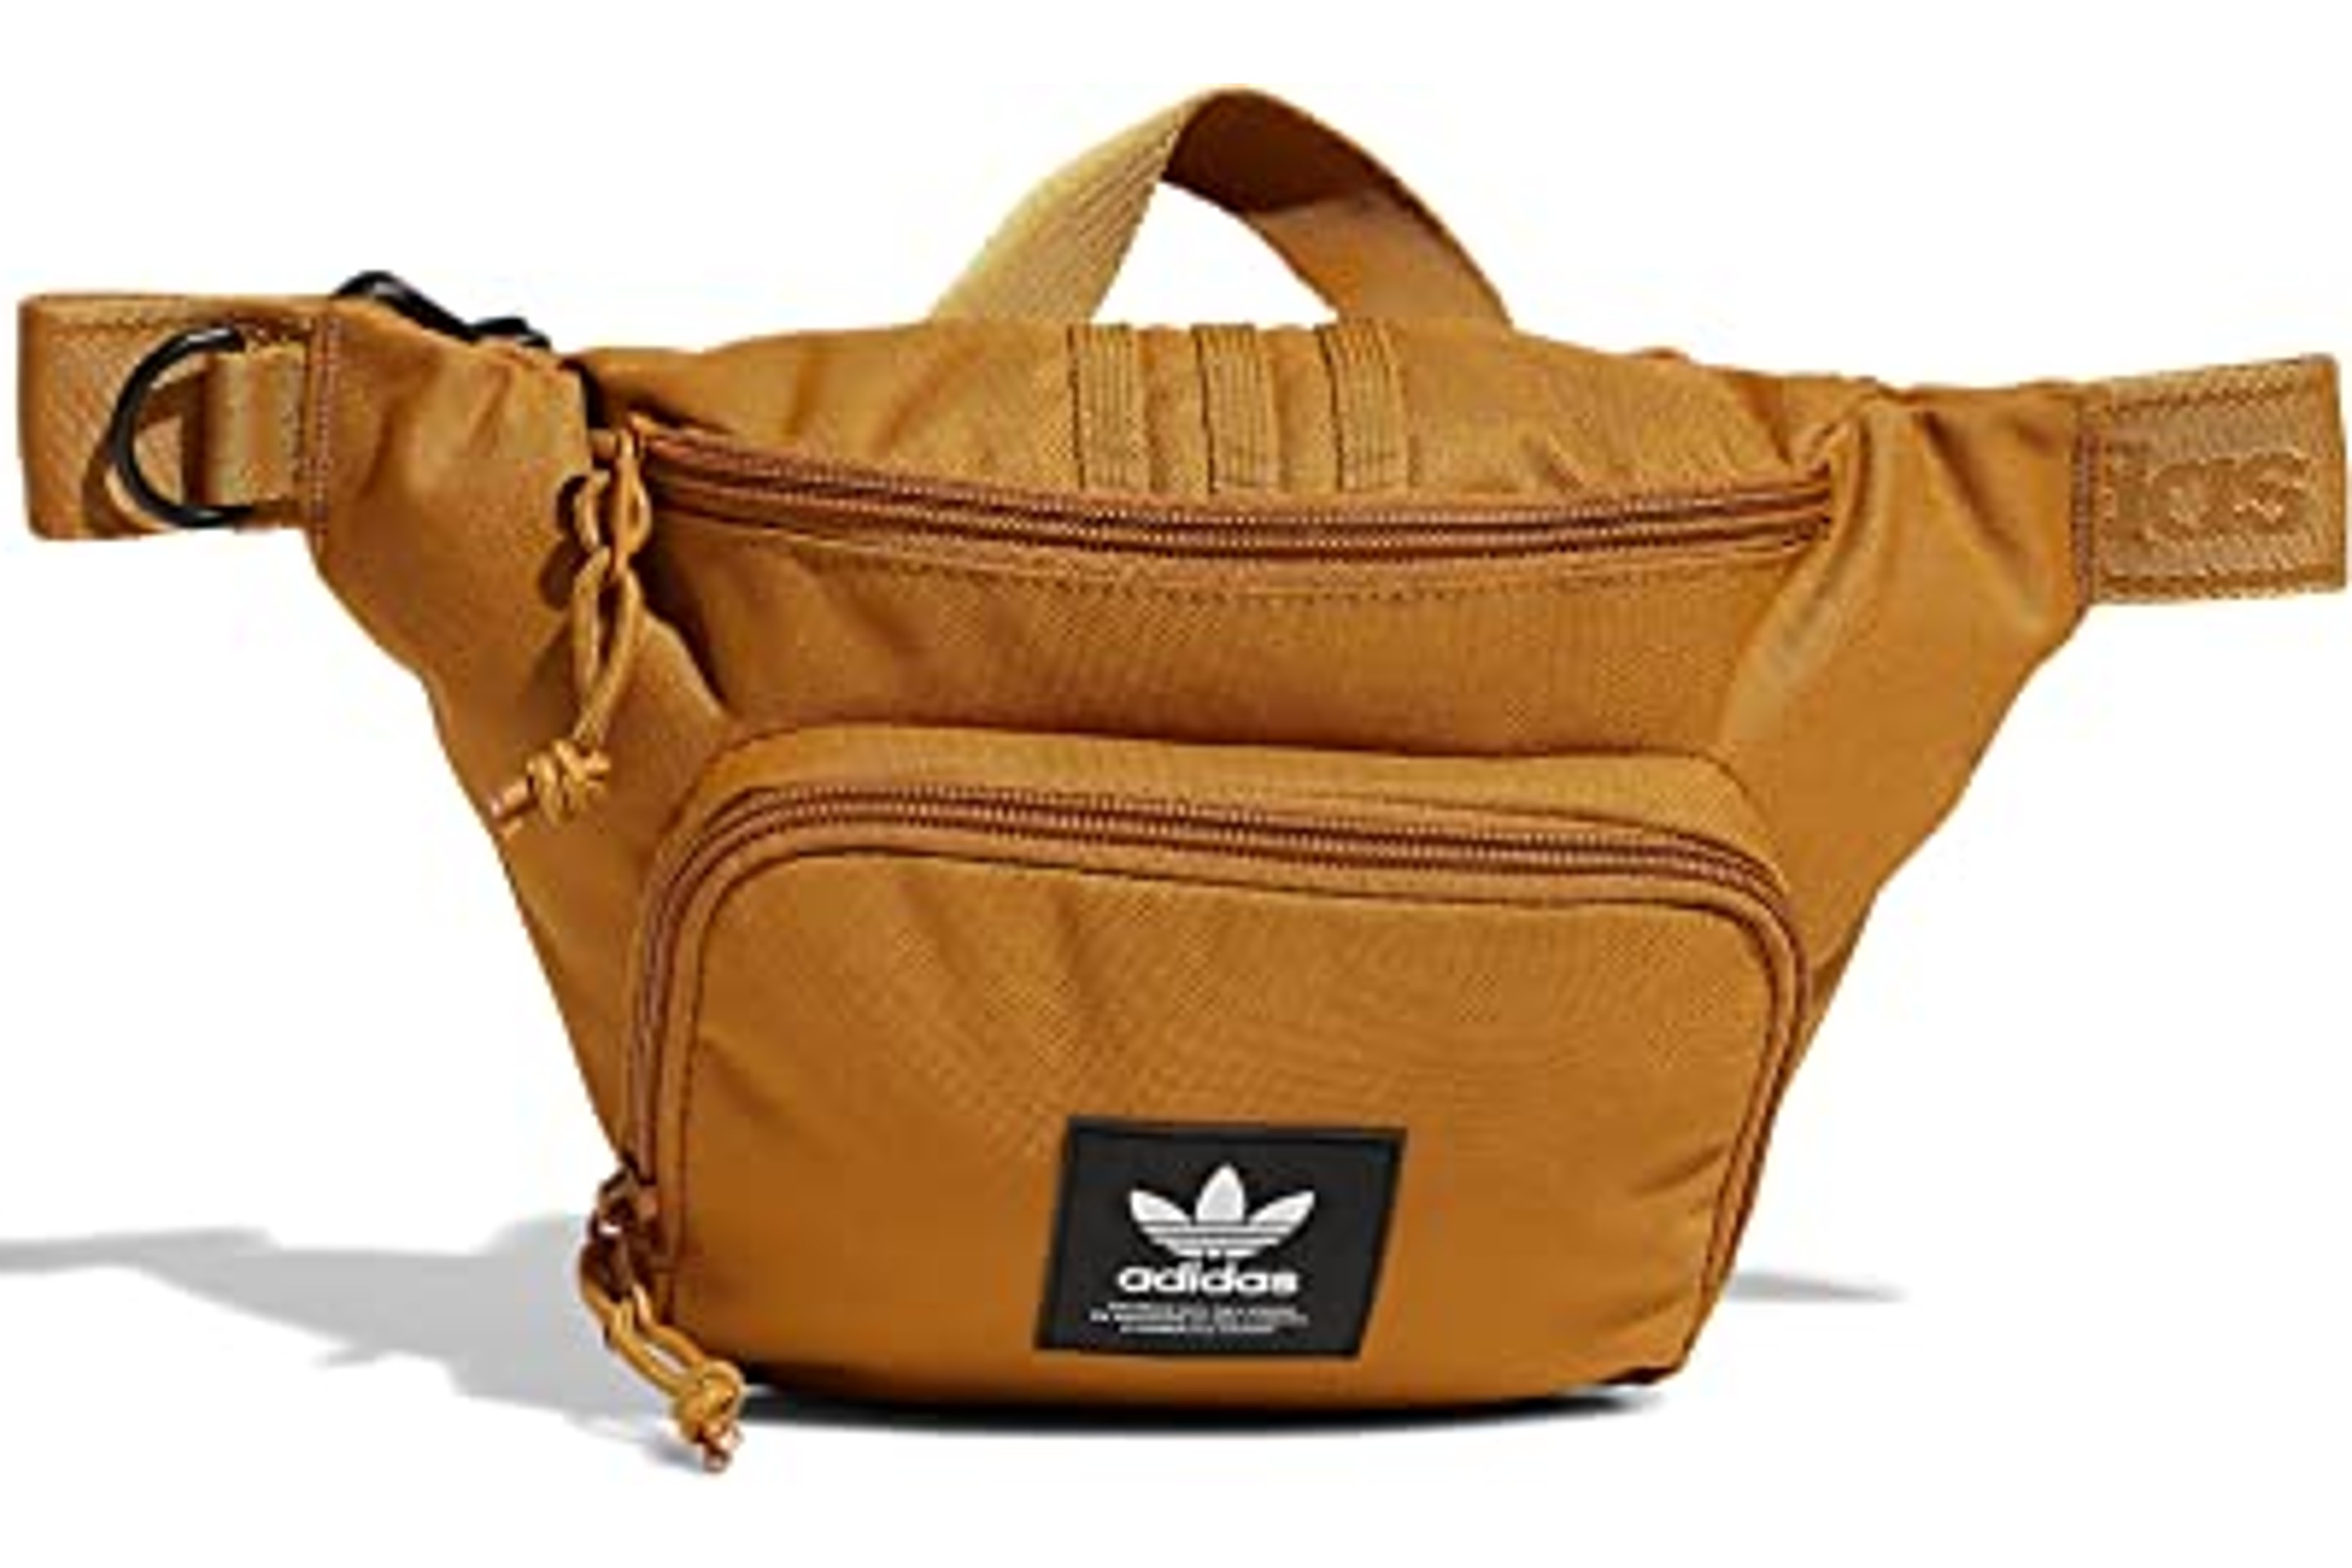 Adidas Small Sport Hip Pack Travel Bag